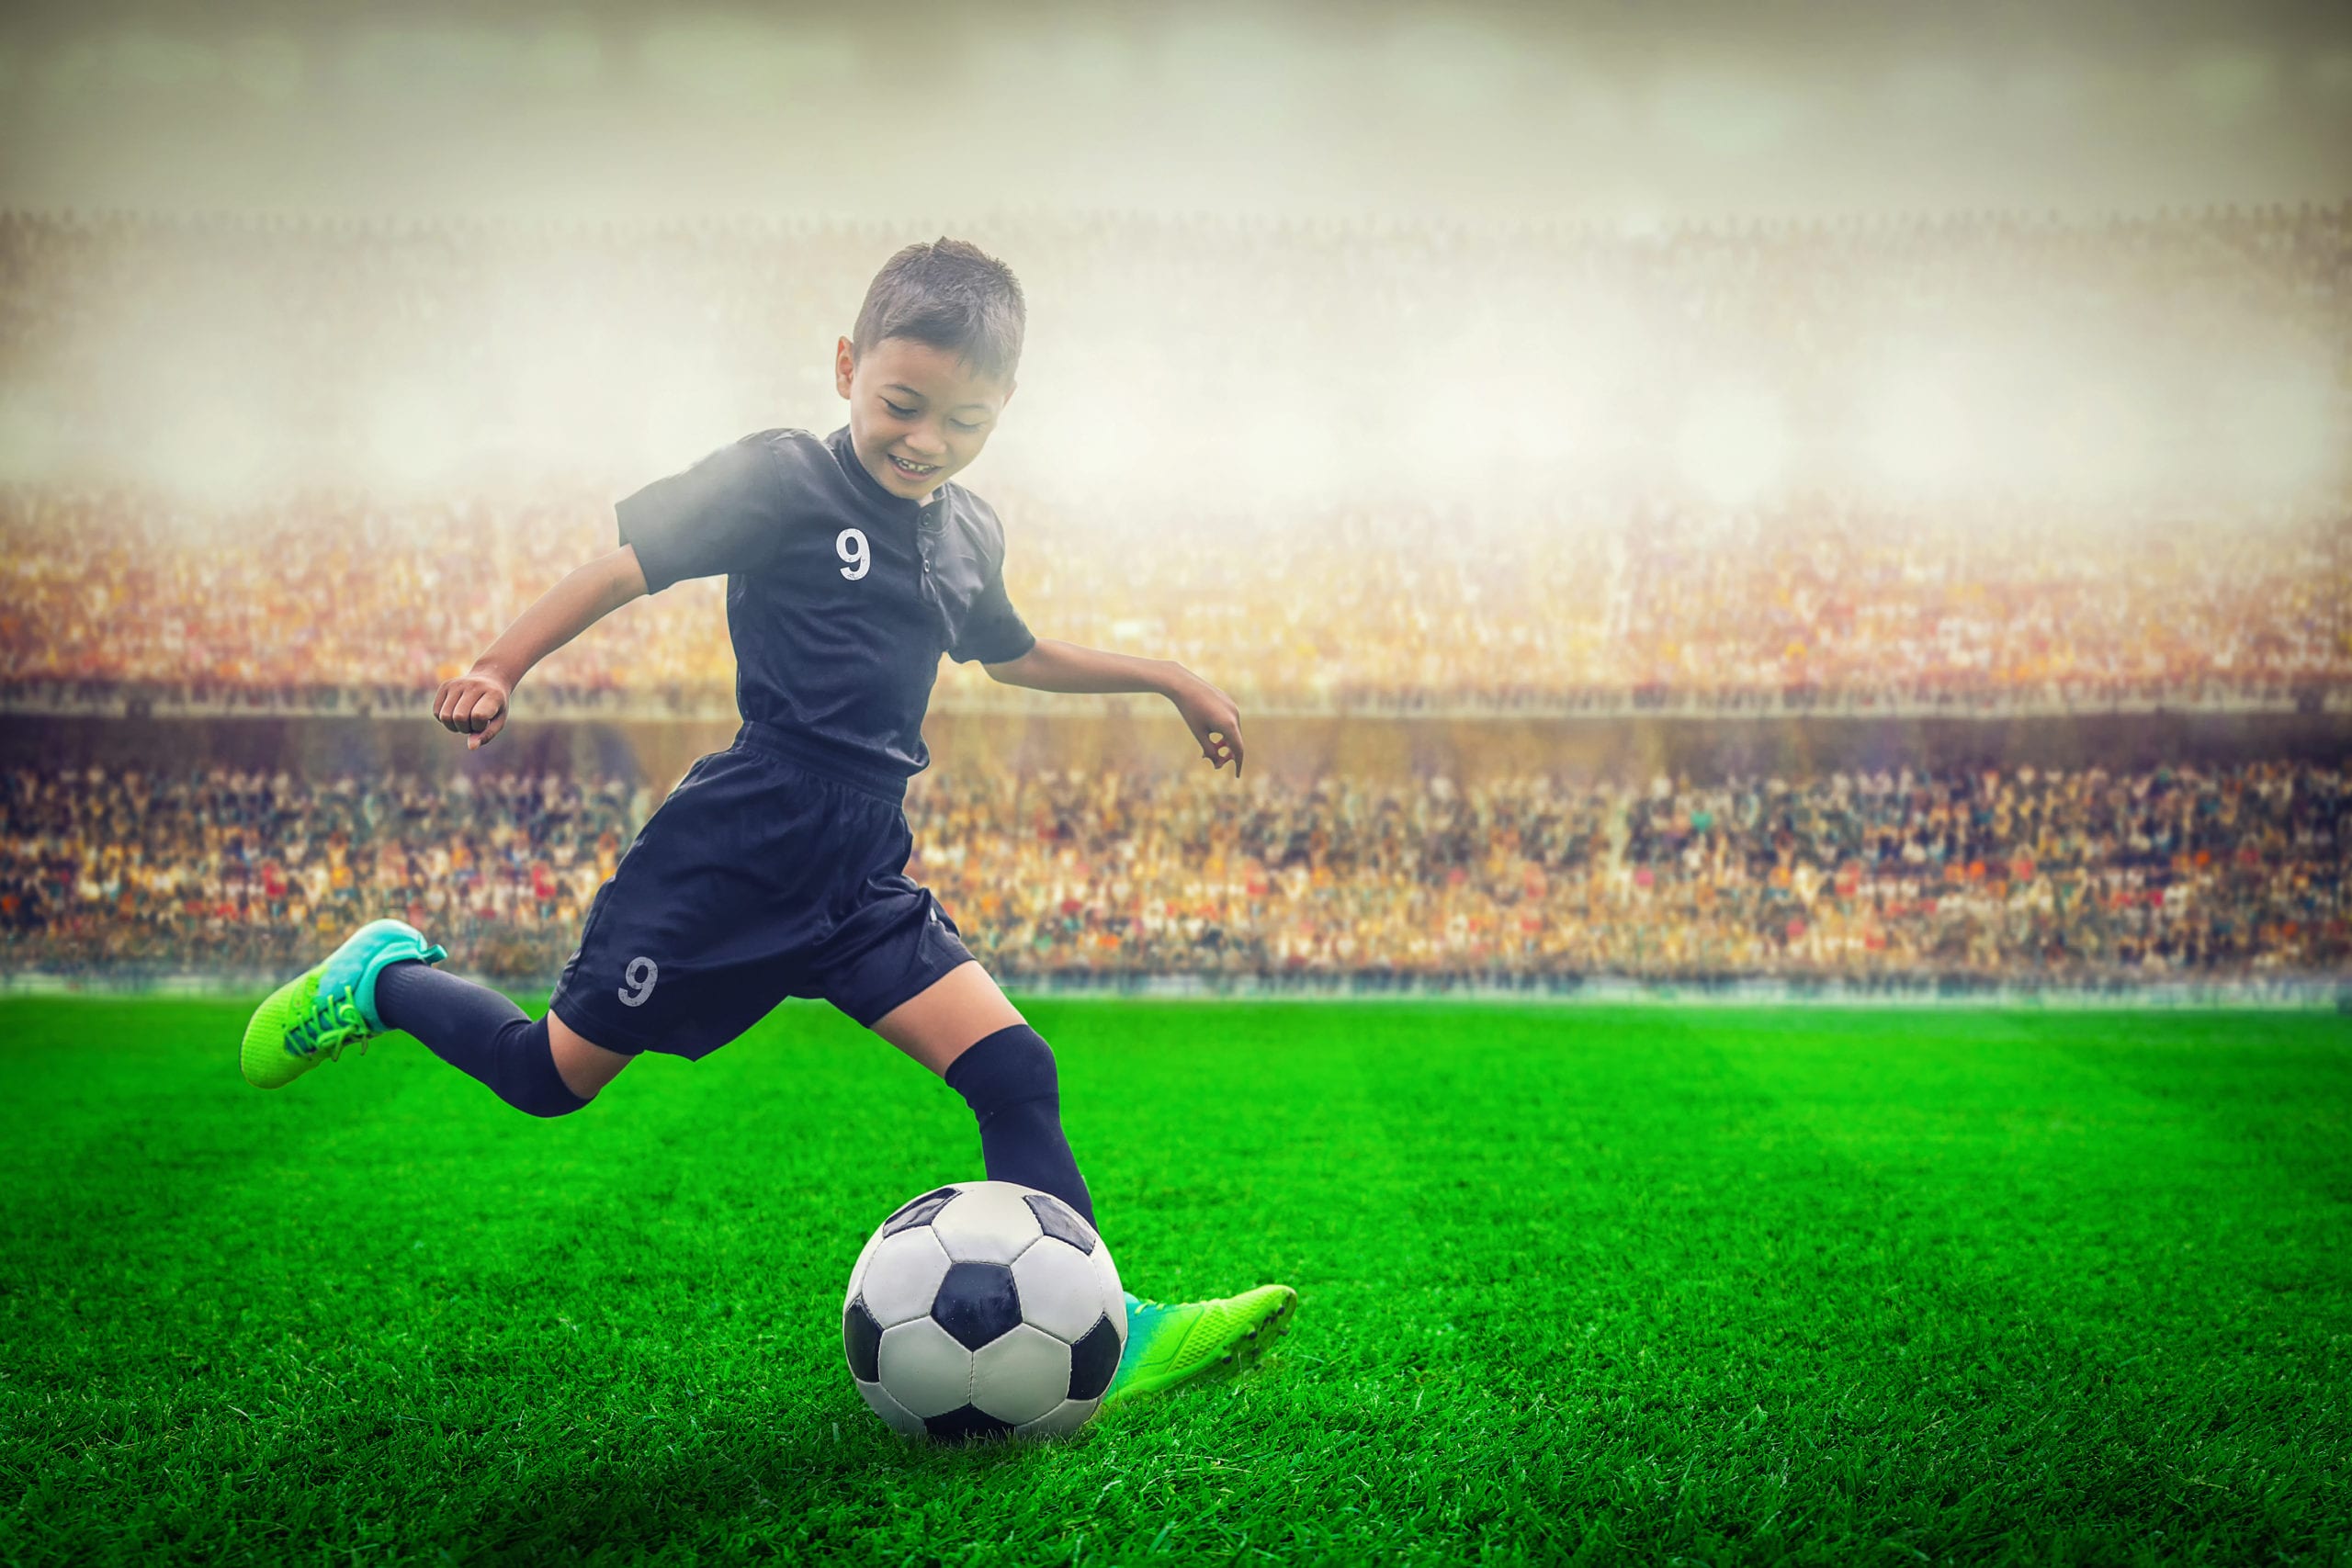 7 Benefits of Kids Soccer - Sports Movement